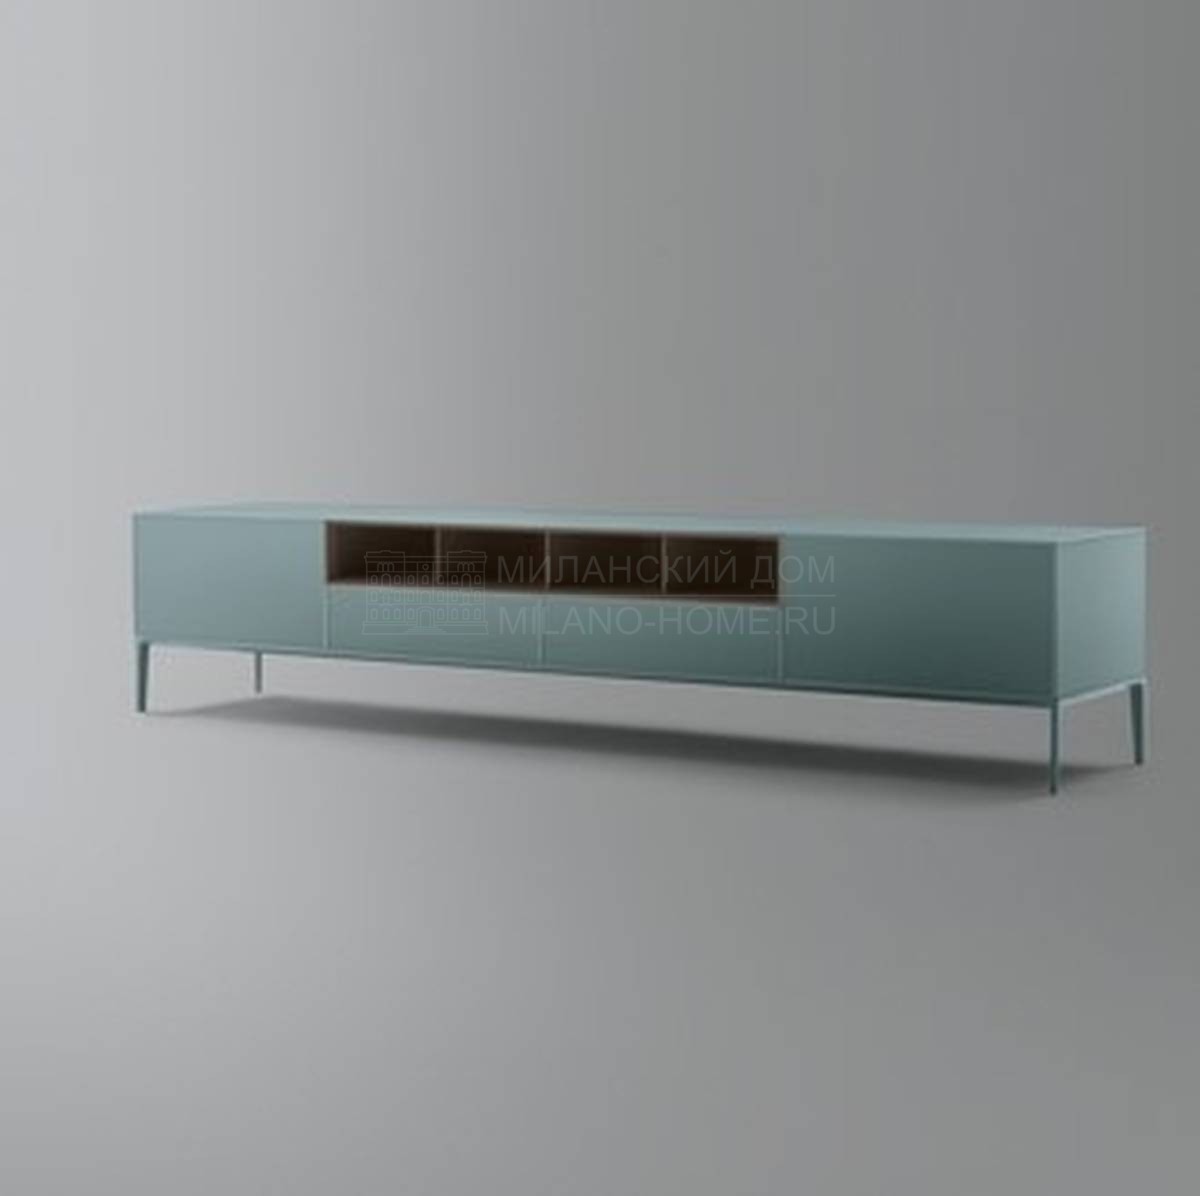 Мебель для ТВ Self up TV stand из Италии фабрики RIMADESIO